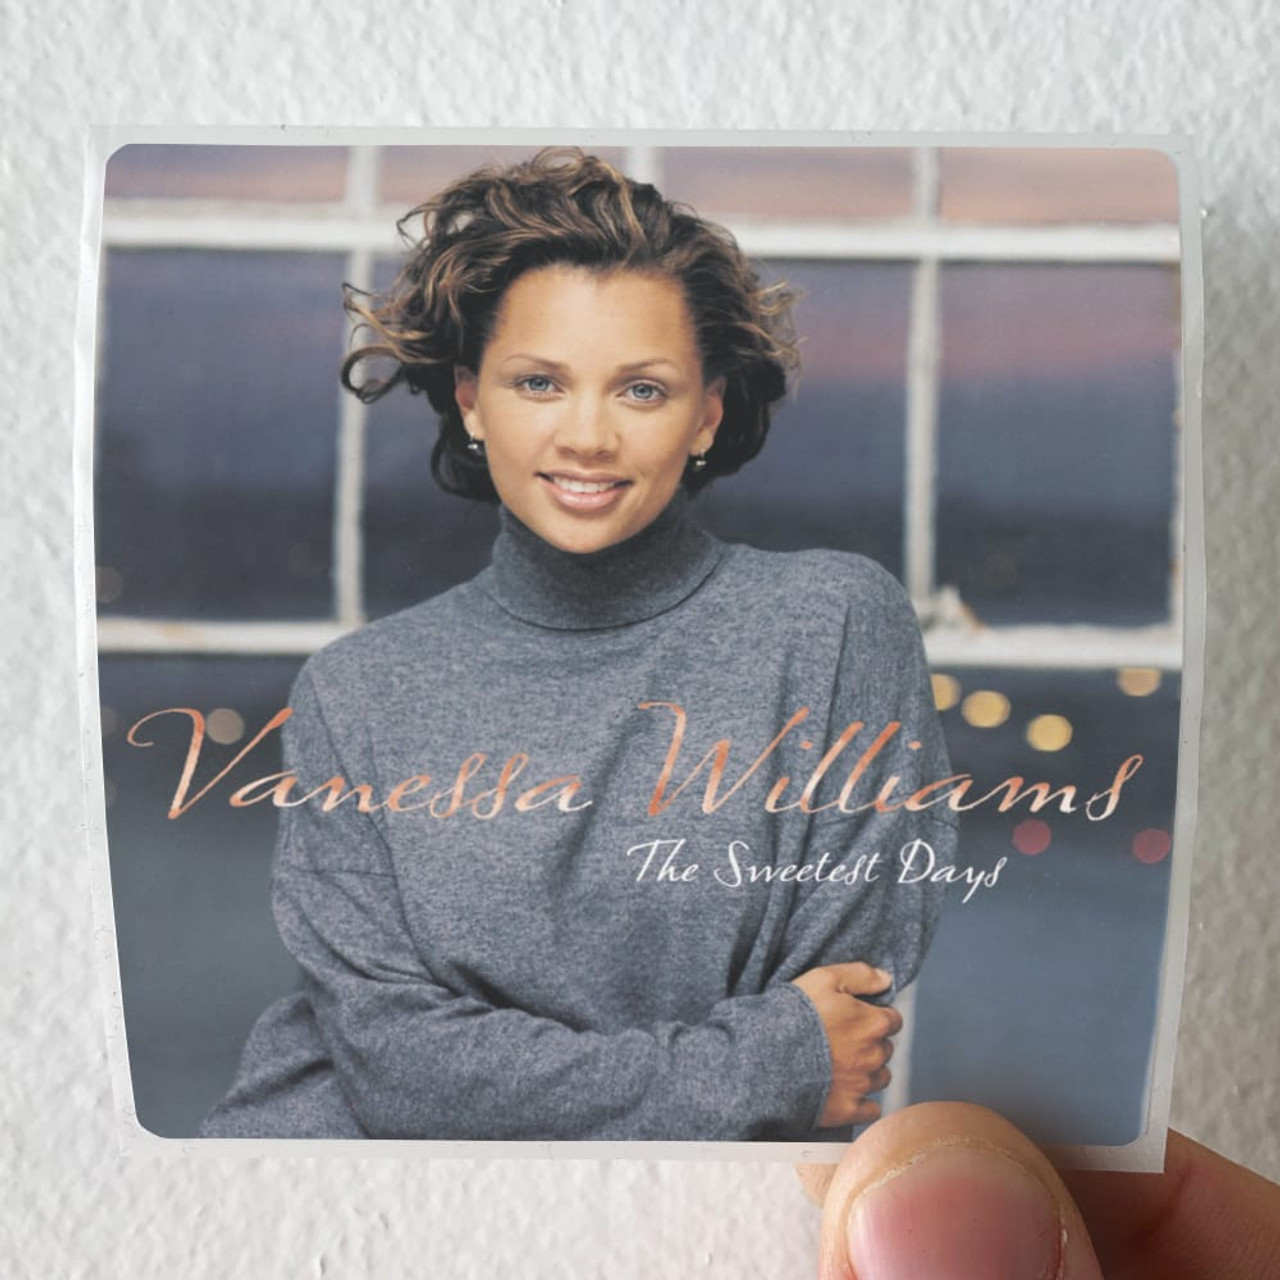 Vanessa Williams The Sweetest Days Album Cover Sticker